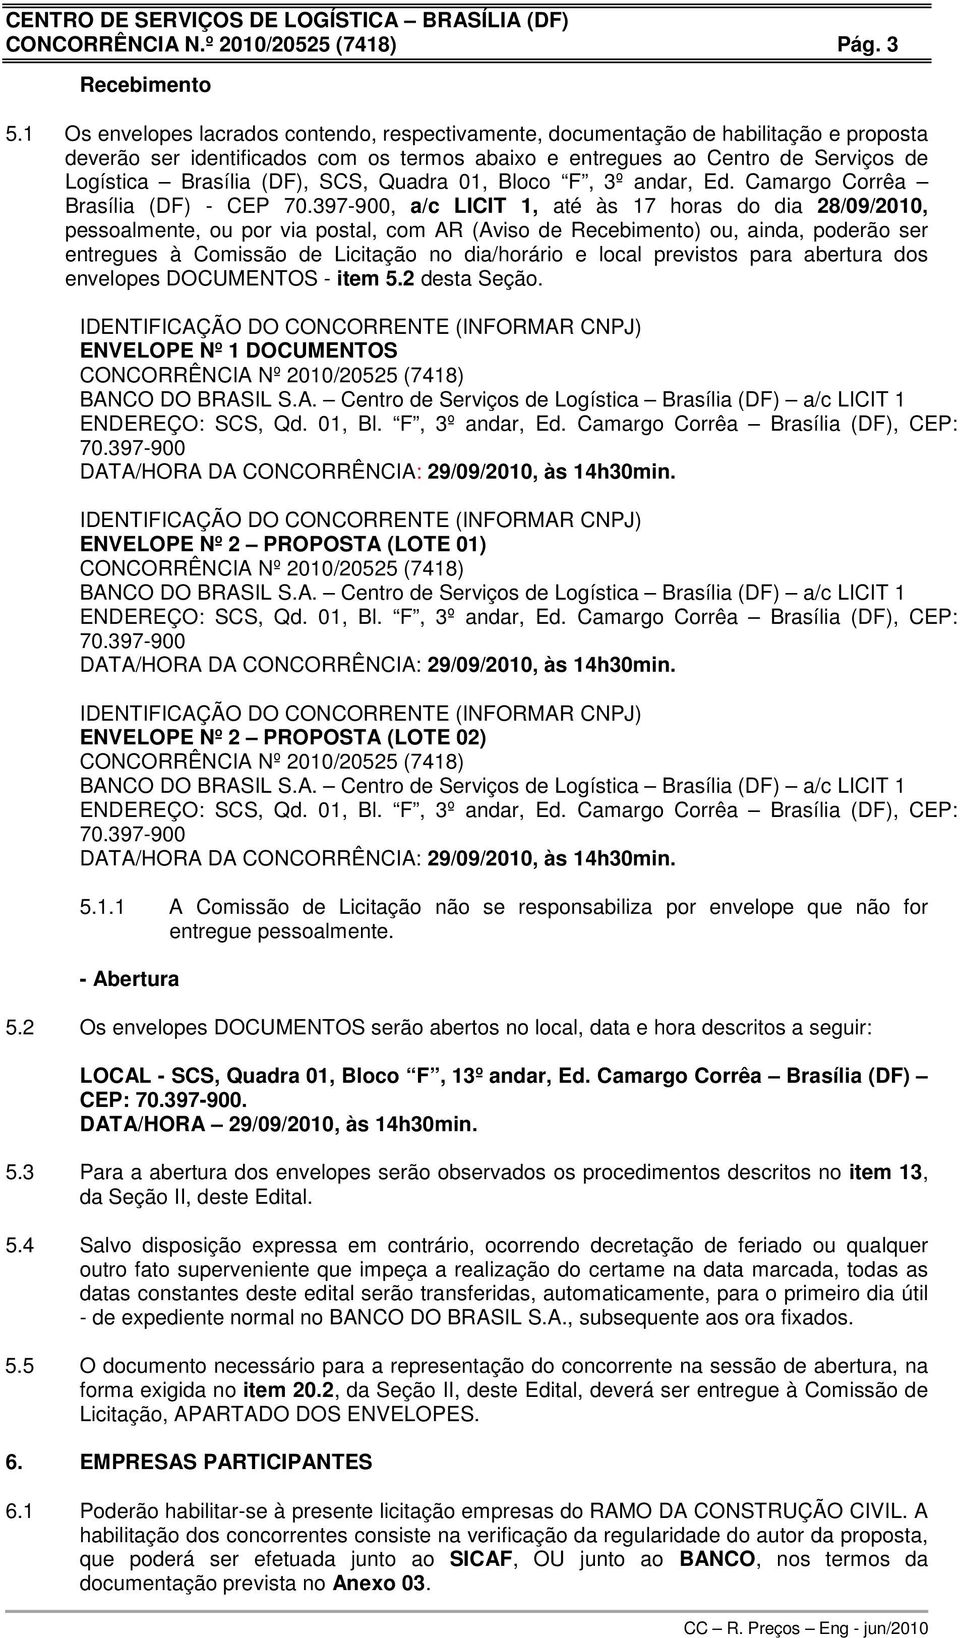 SCS, Quadra 01, Bloco F, 3º andar, Ed. Camargo Corrêa Brasília (DF) - CEP 70.